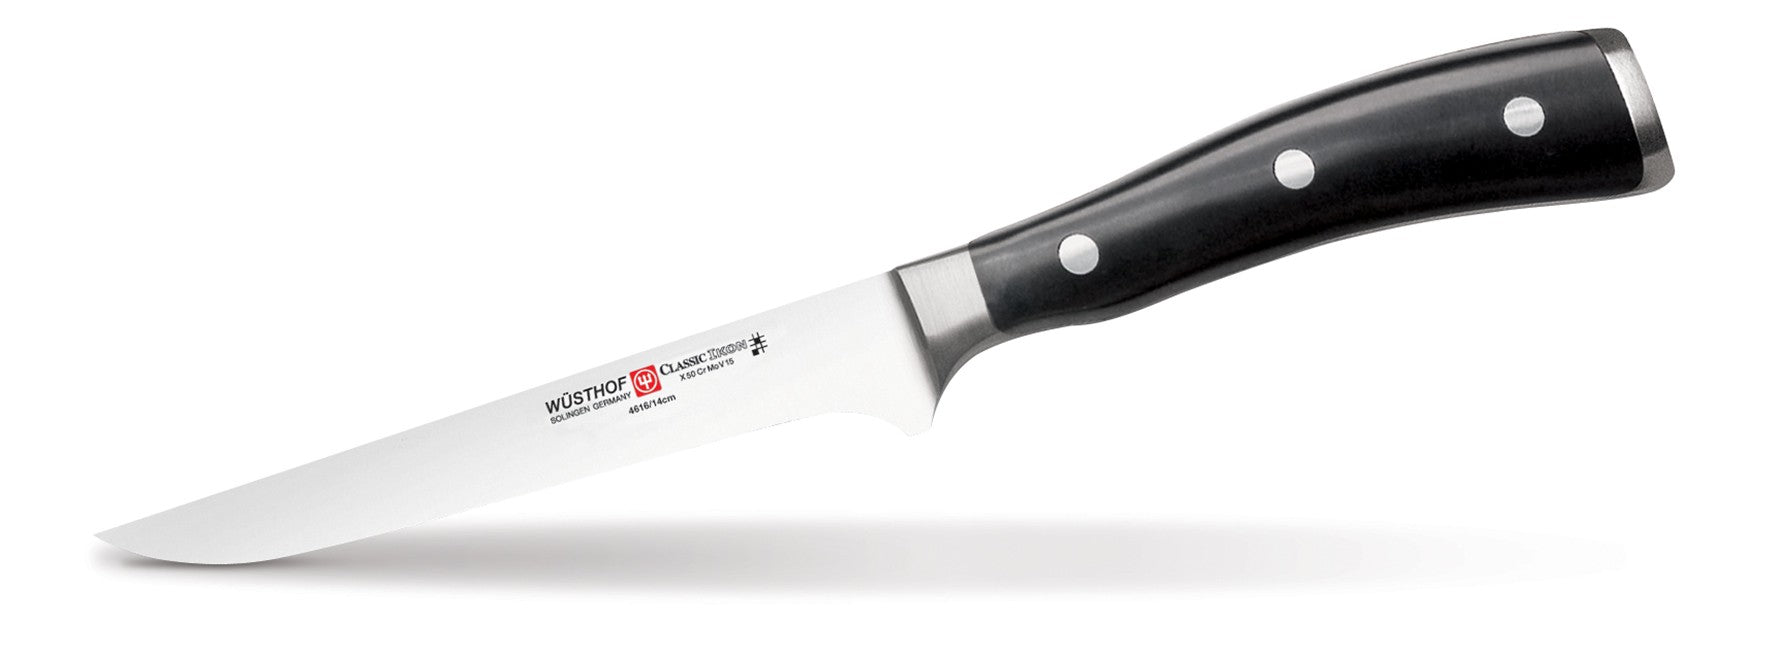 Wusthof Classic Ikon 5 Inch Boning Knife